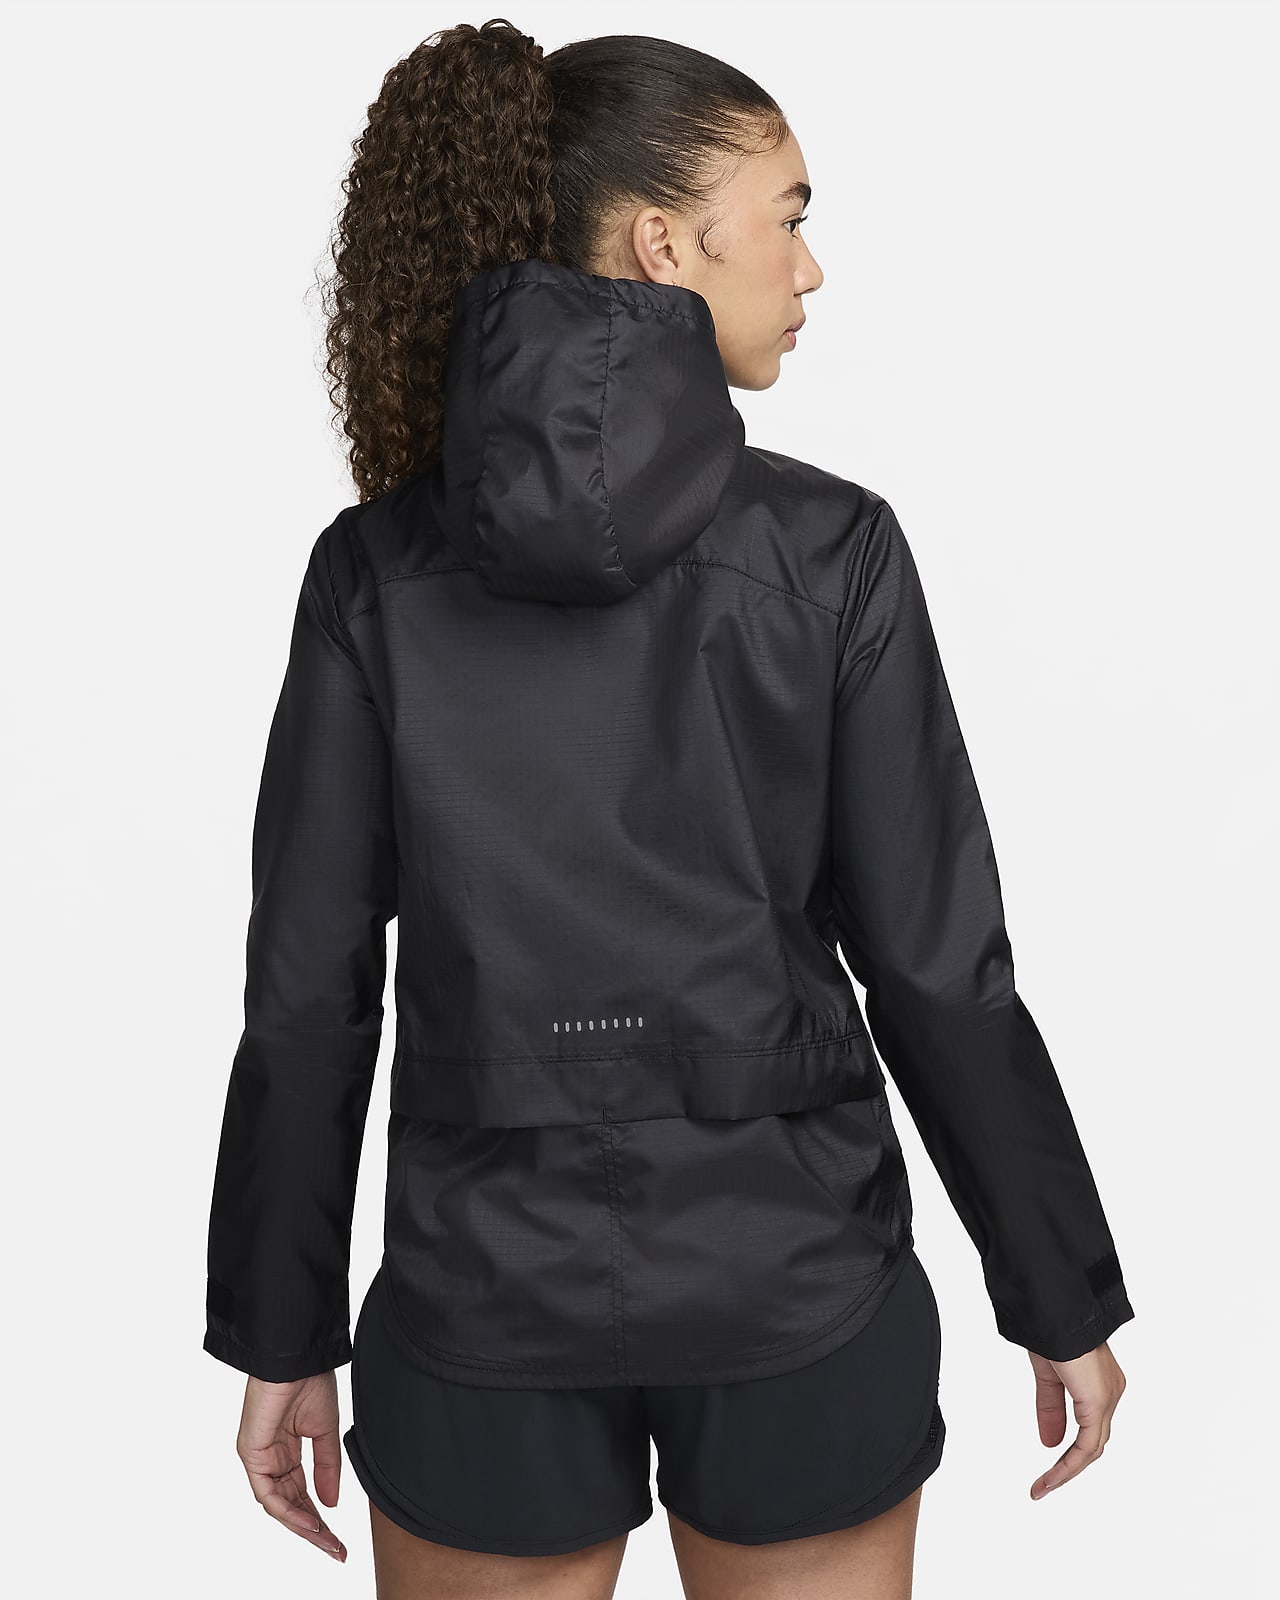 Nike Running Women\'s Essential Jacket.